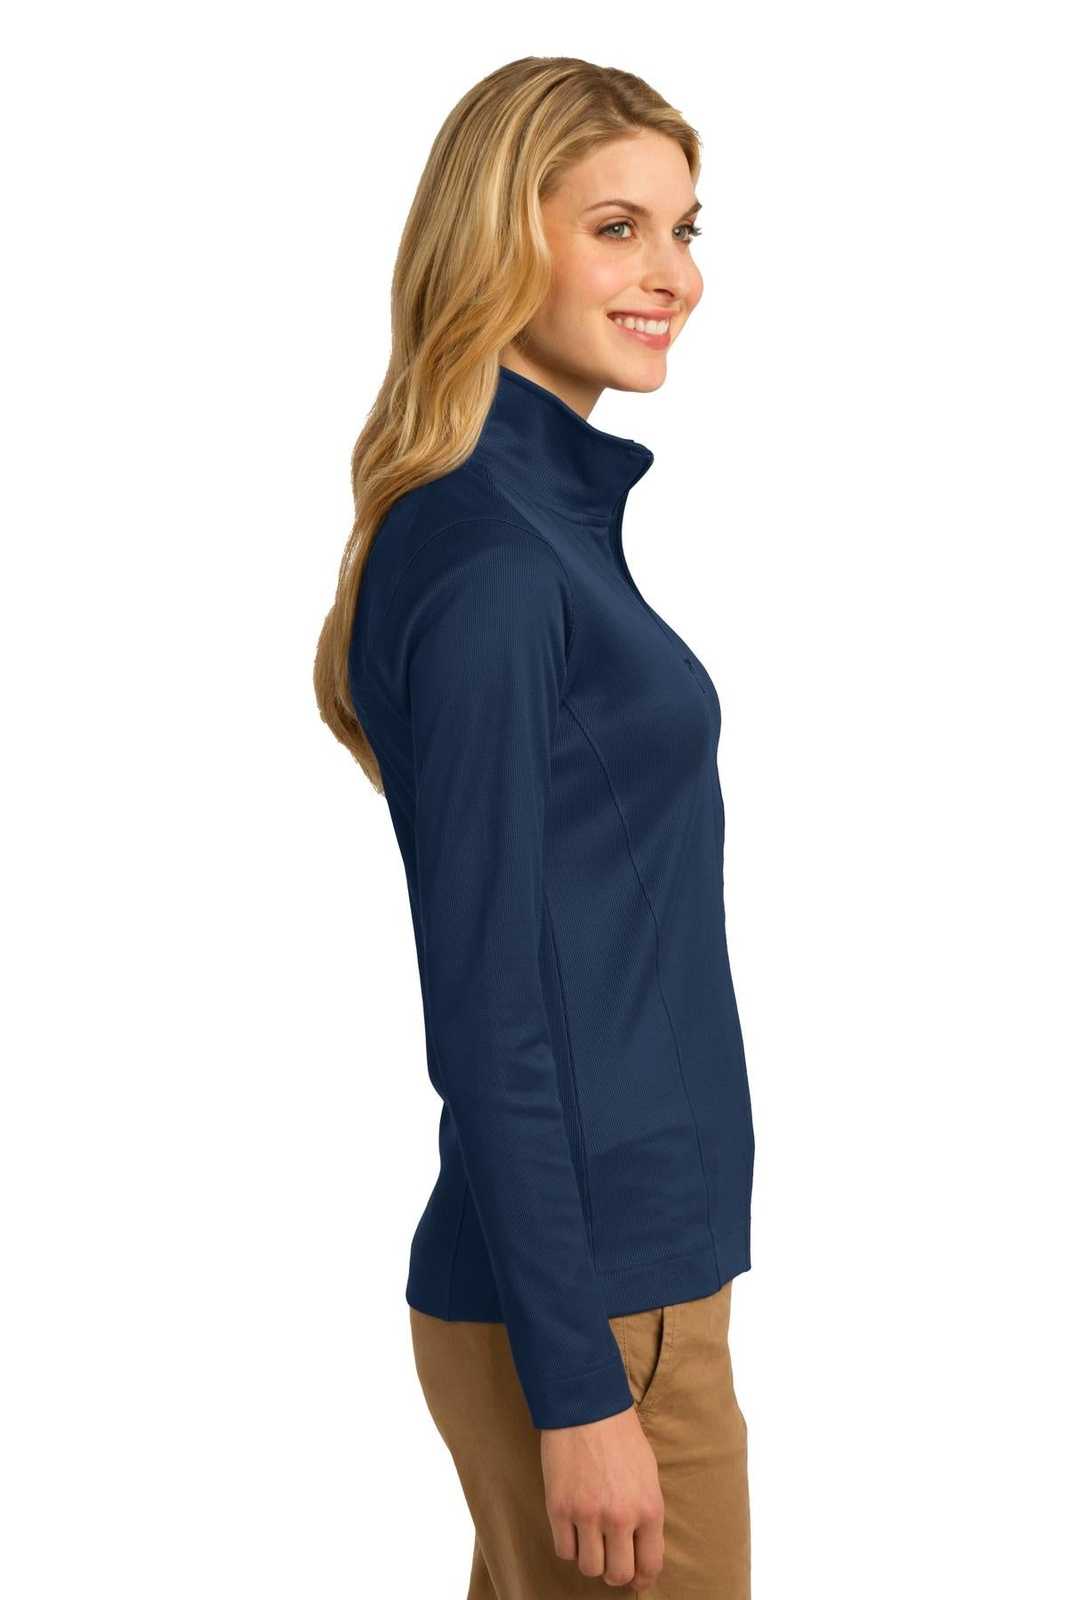 Port Authority L805 Ladies Vertical Texture Full-Zip Jacket - Regatta Blue Iron Gray - HIT a Double - 3